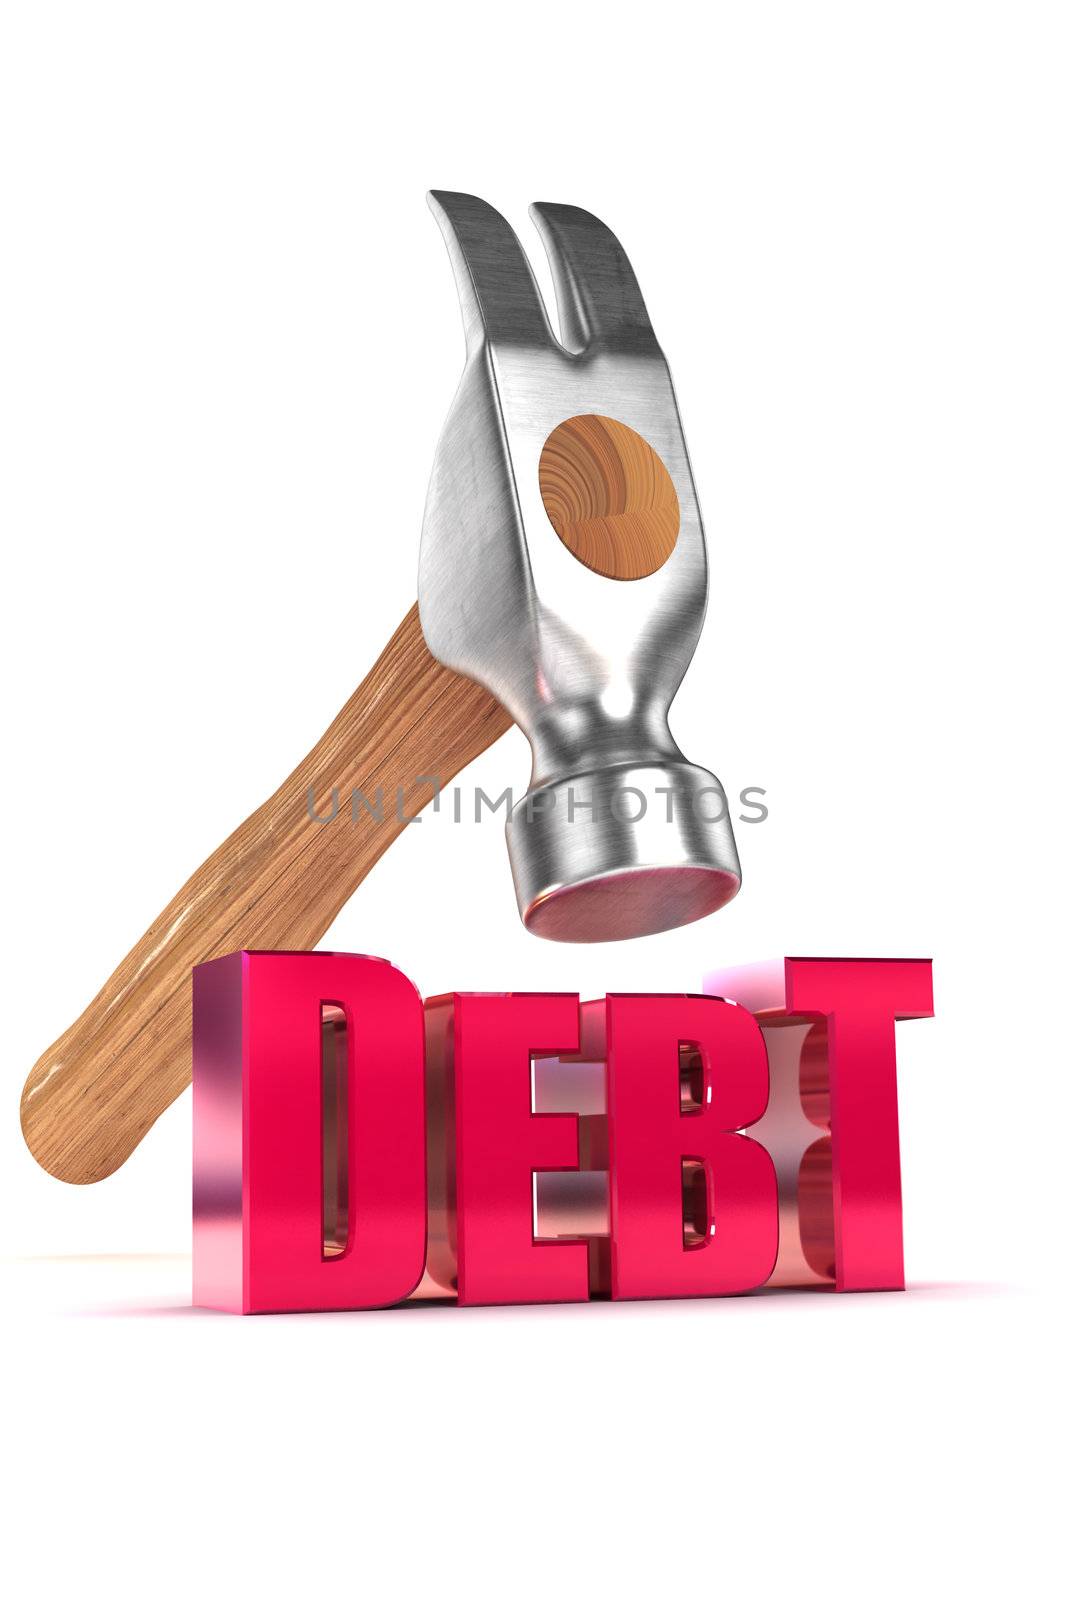 Bringing down Debt by head-off